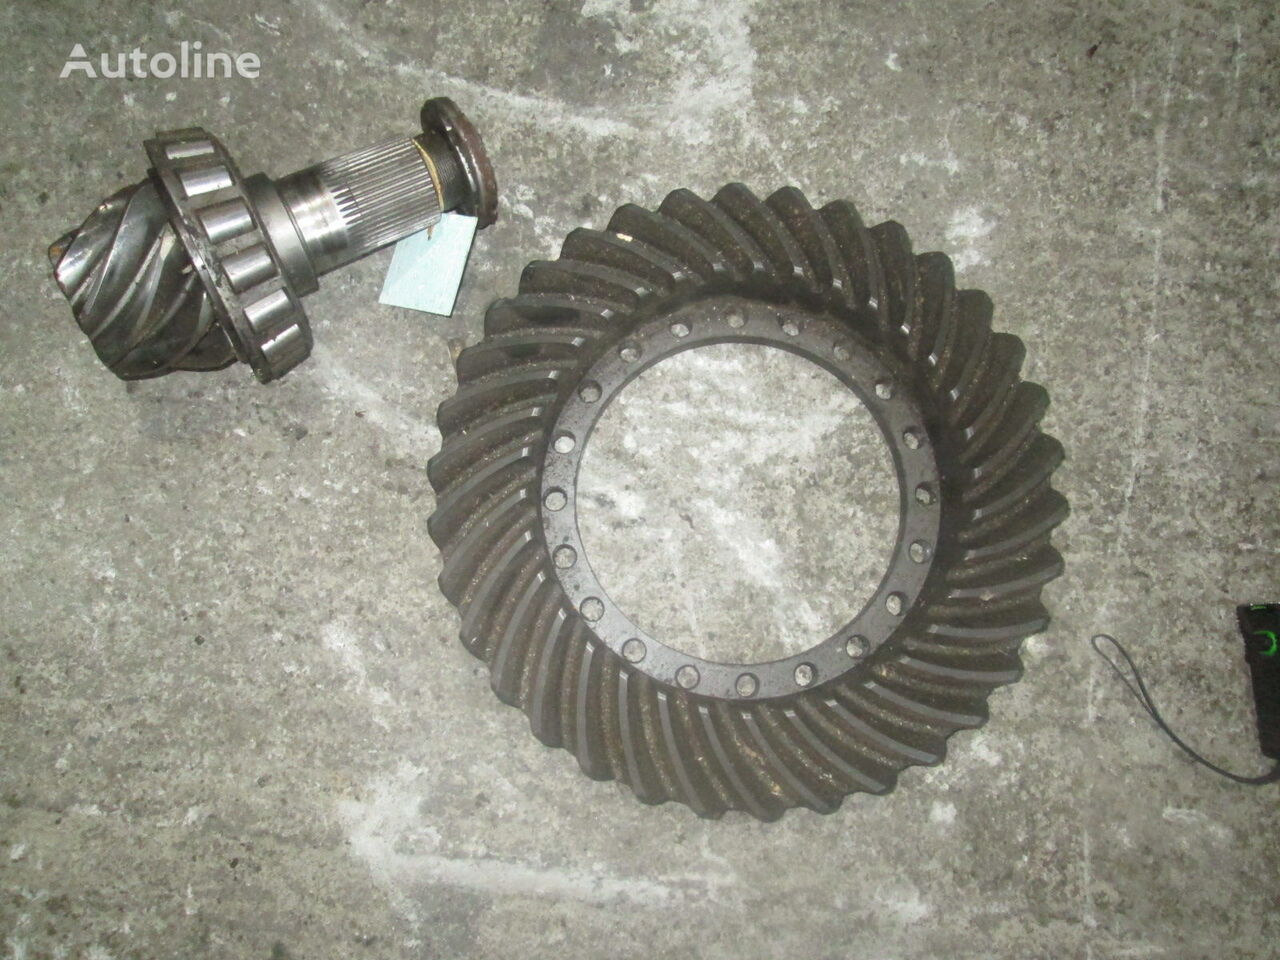 ZF 4460 325 044 ZP 8:34 011 (Bevel gear) differential for O&K L25 , O&K L30 wheel loader